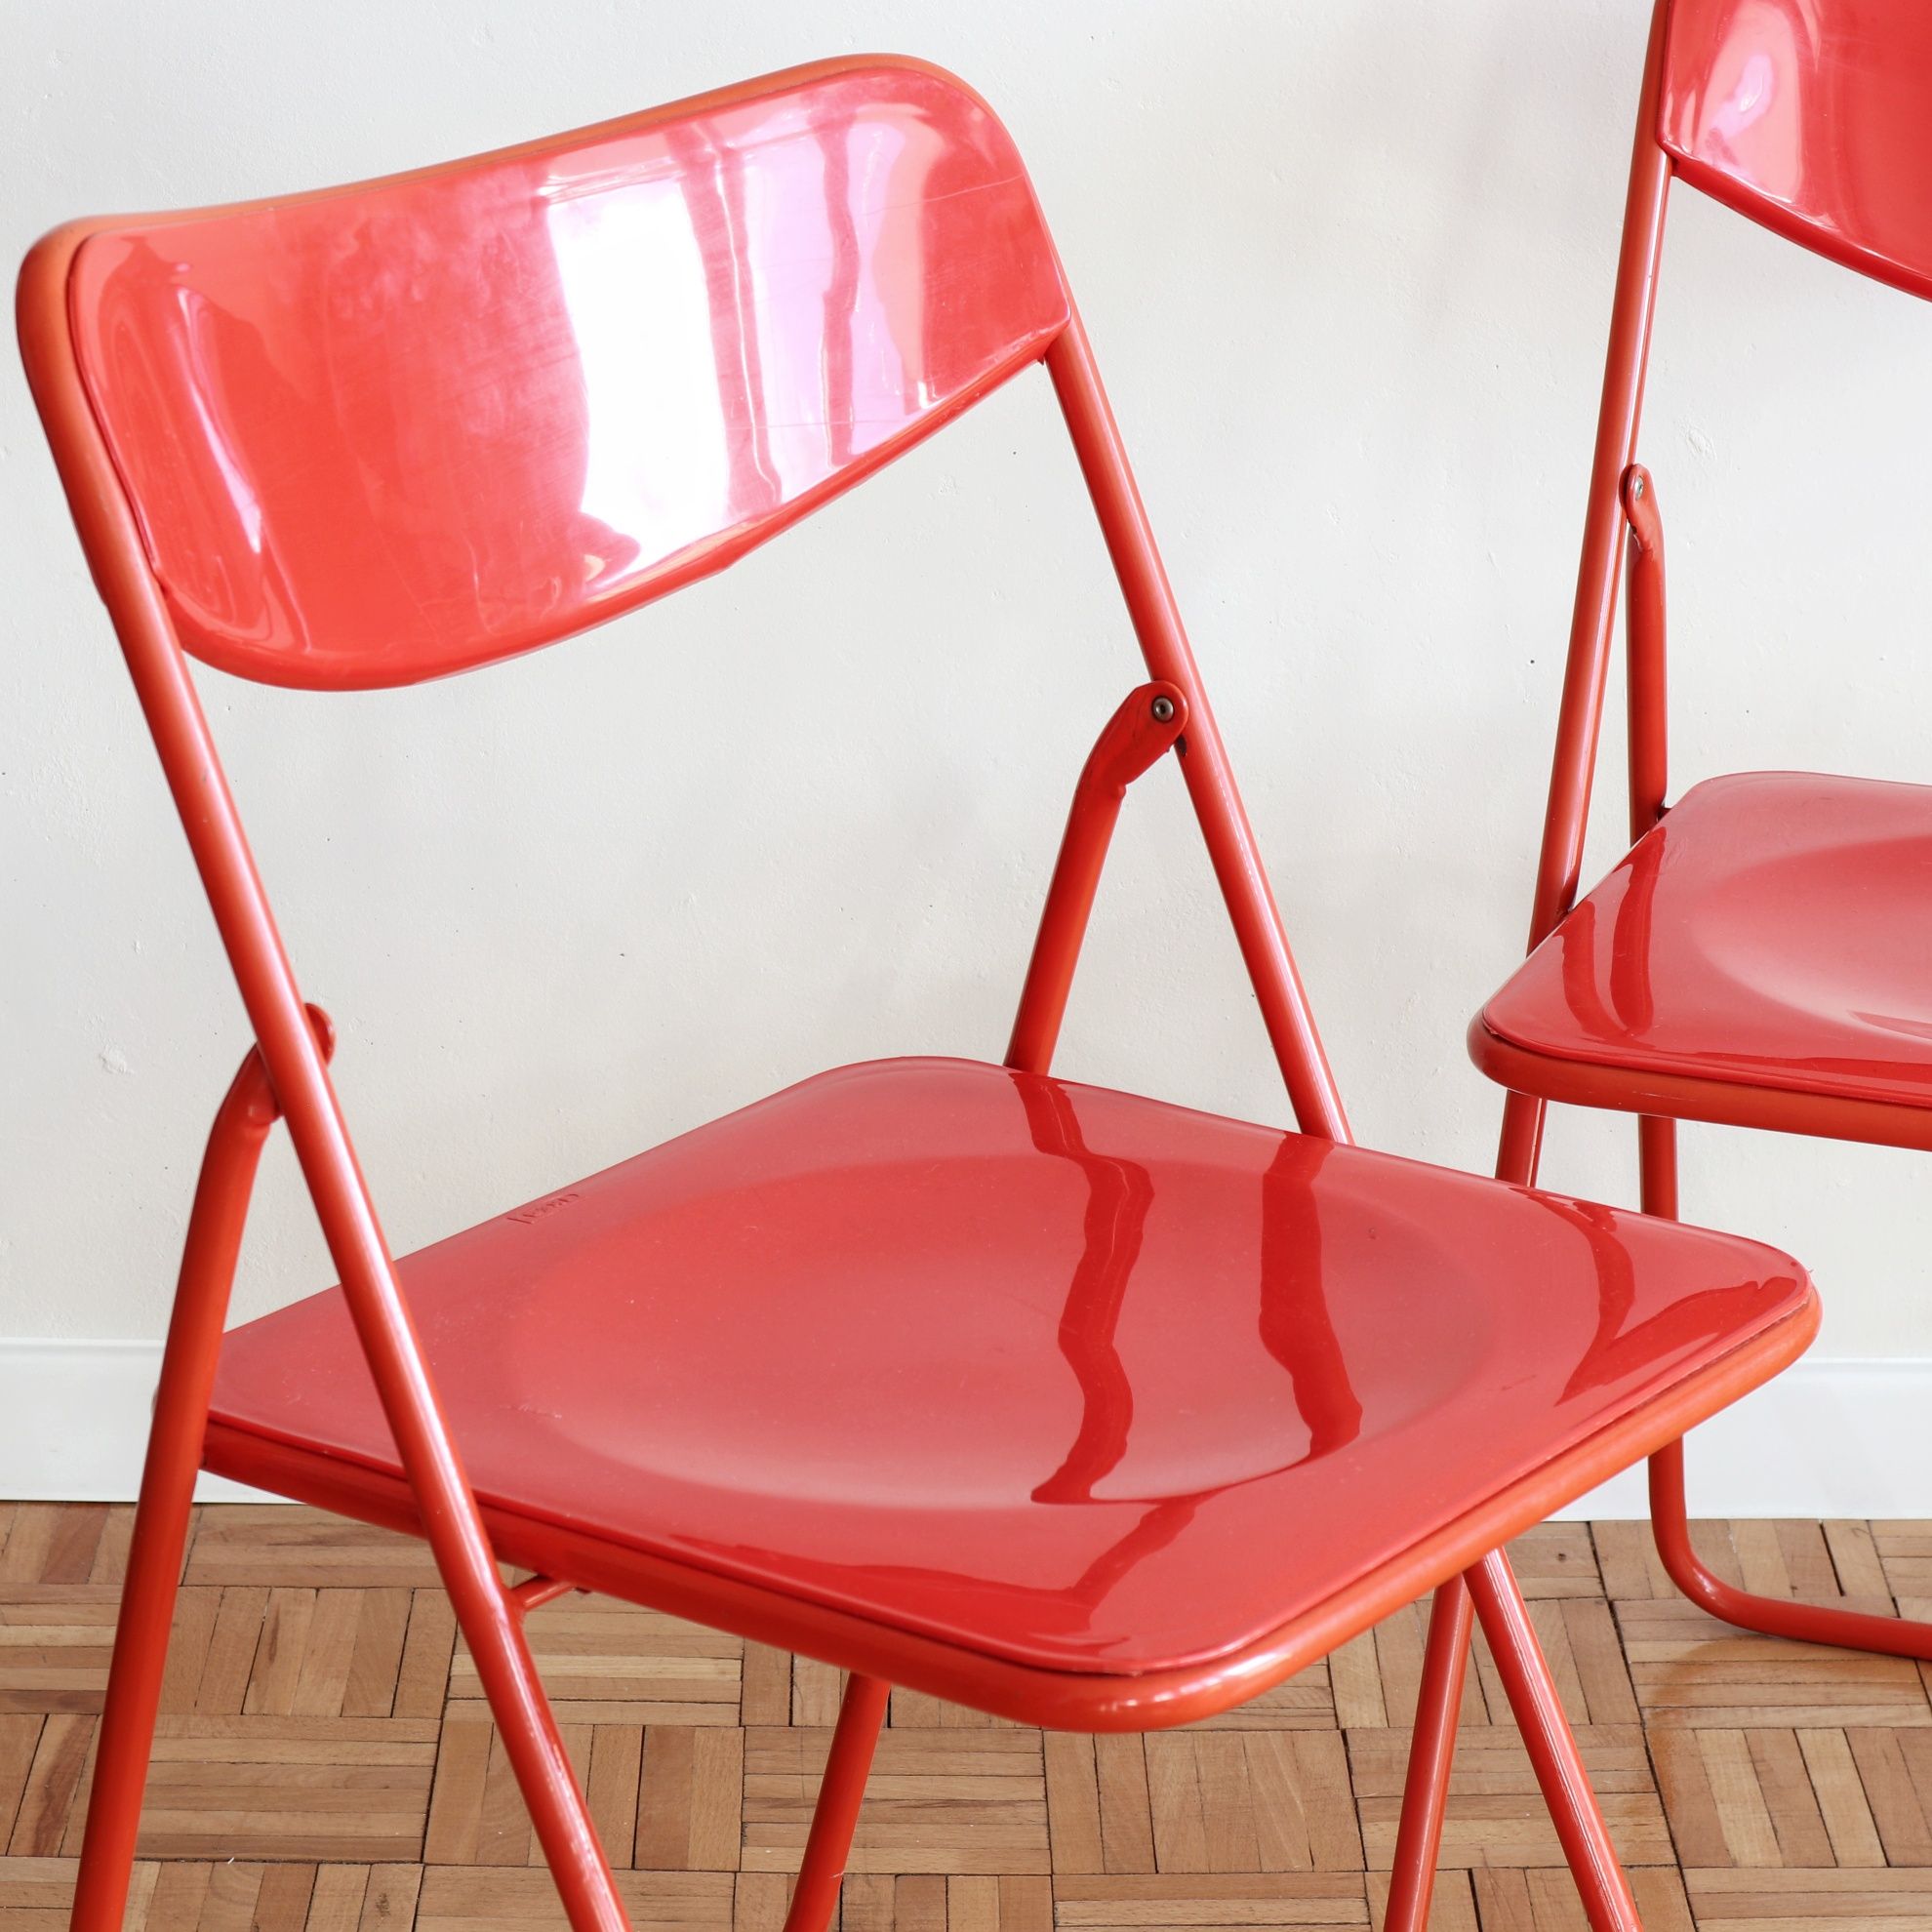 Składane krzesła Ikea Ted Niels Gammelgaard vintage retro lata 70 80